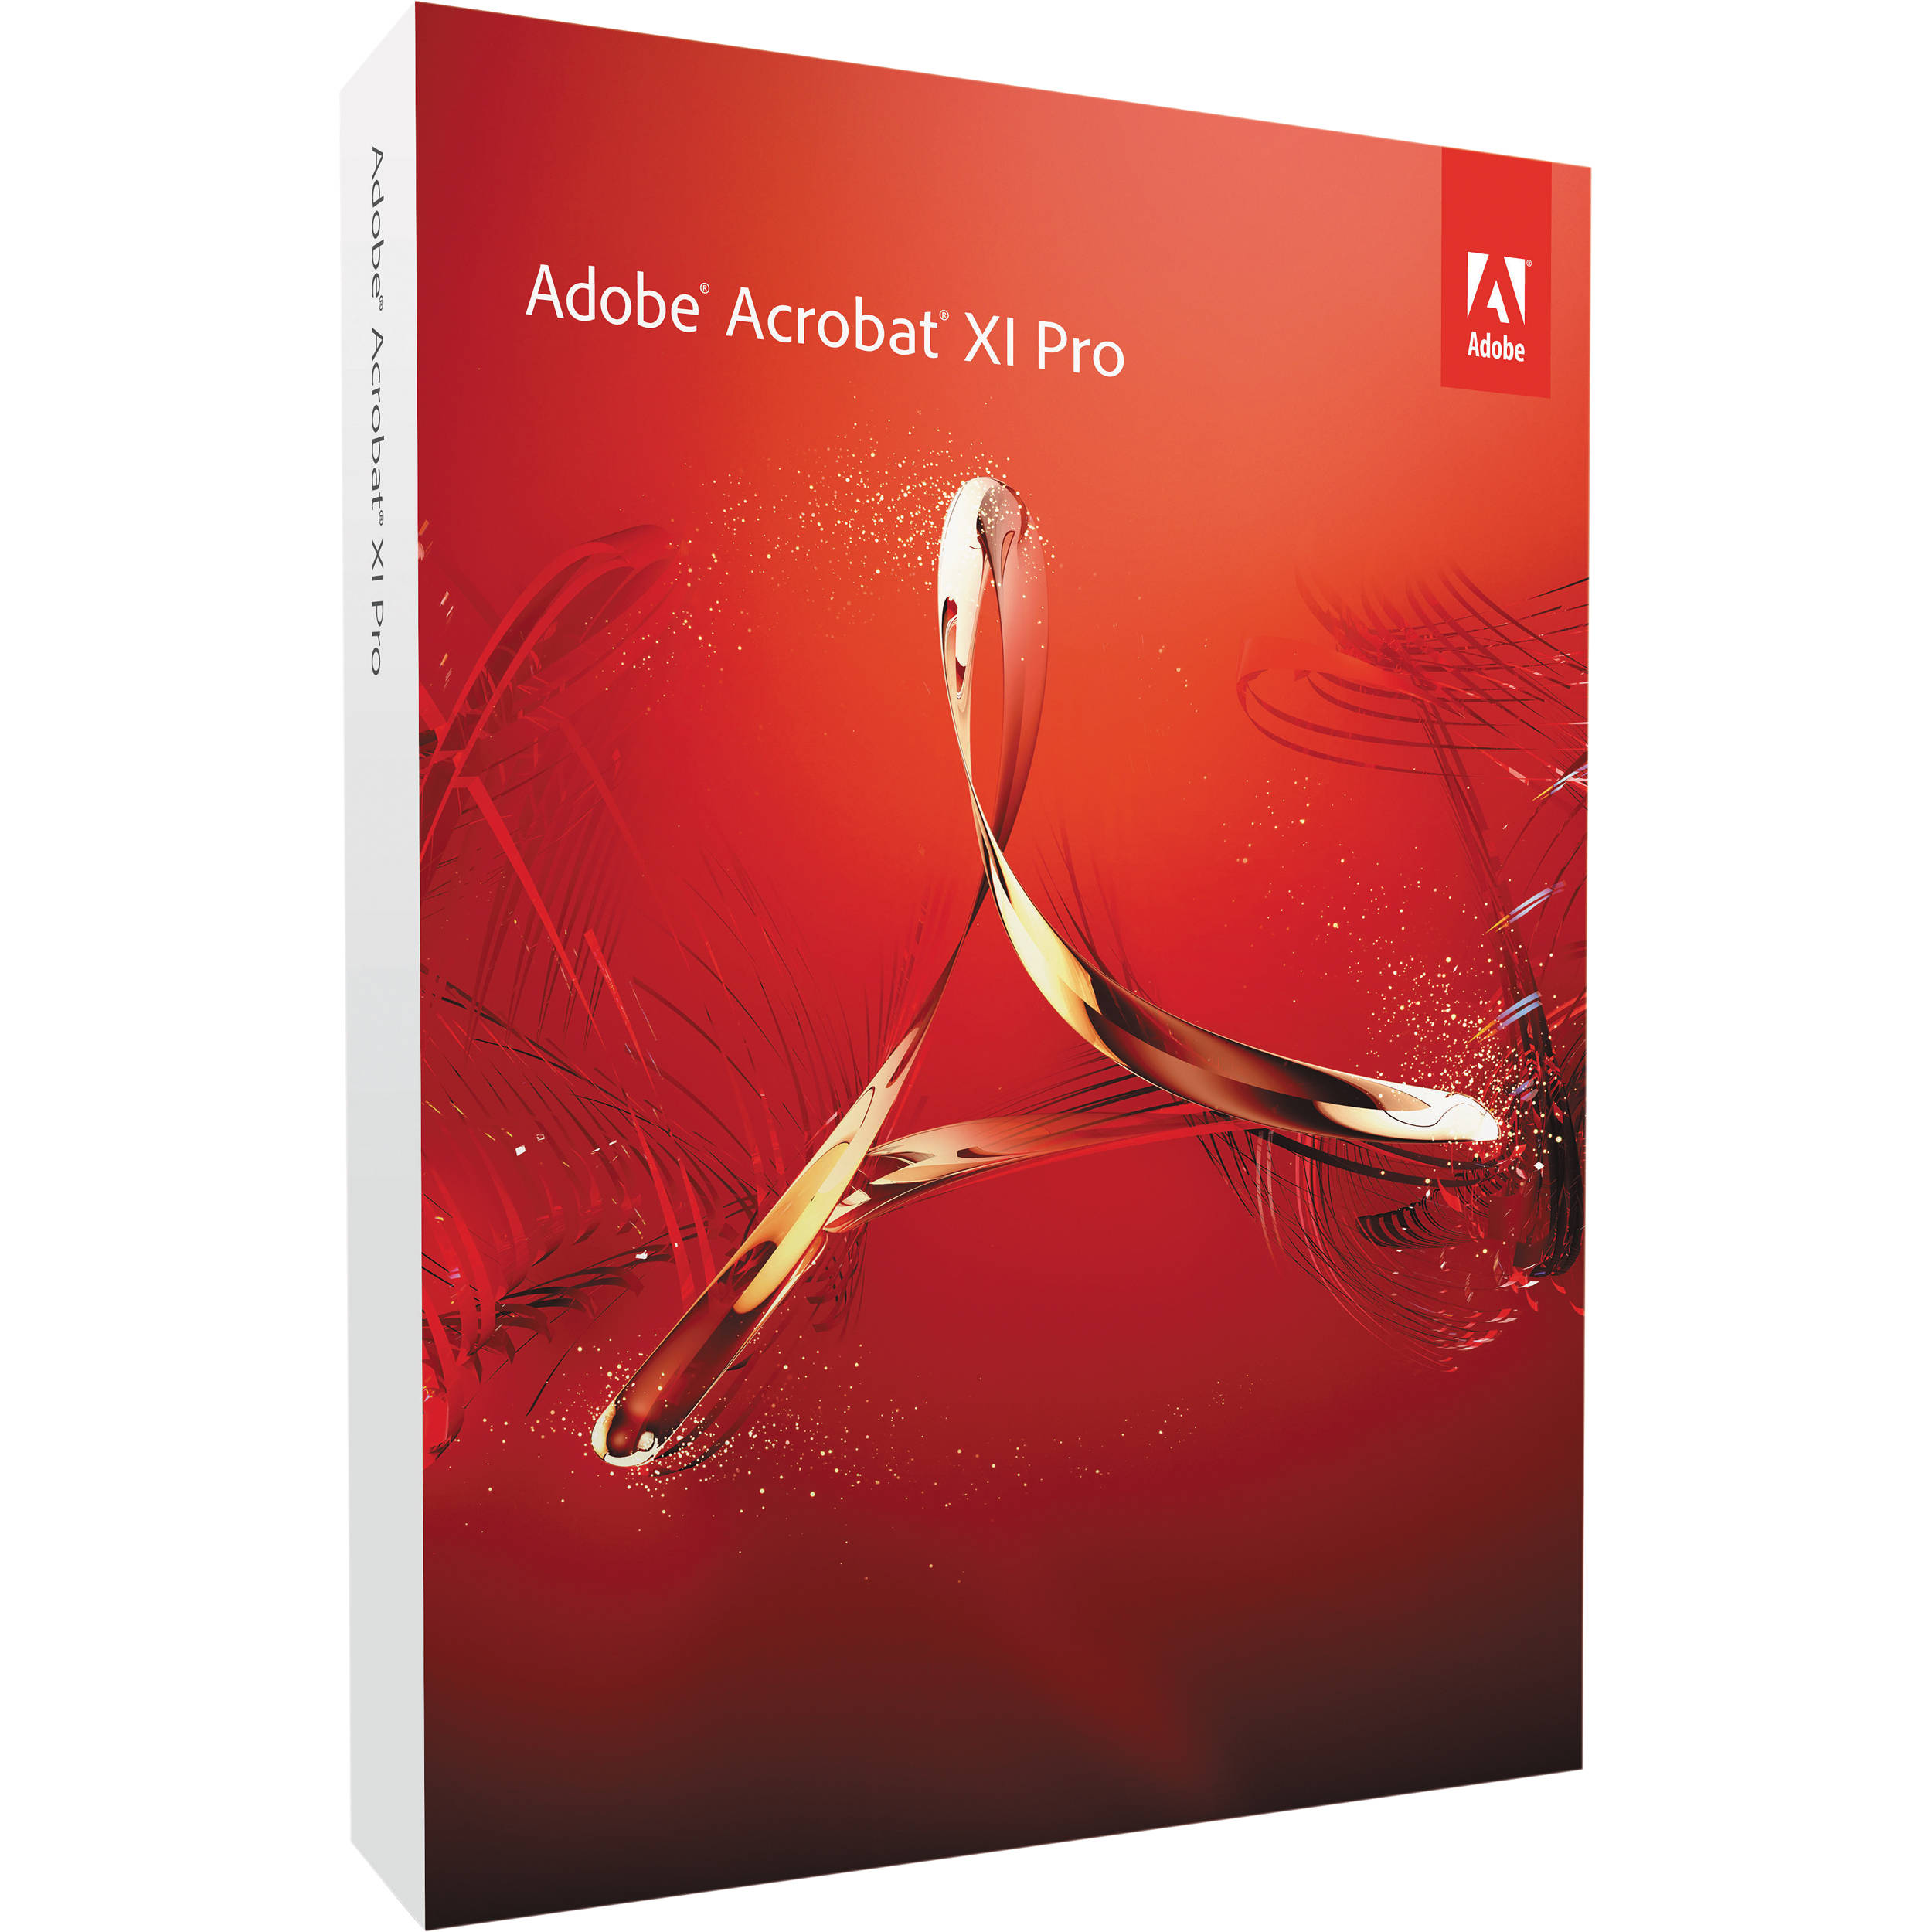 Adobe Acrobat Xi Pro Crack Amtlib Dll